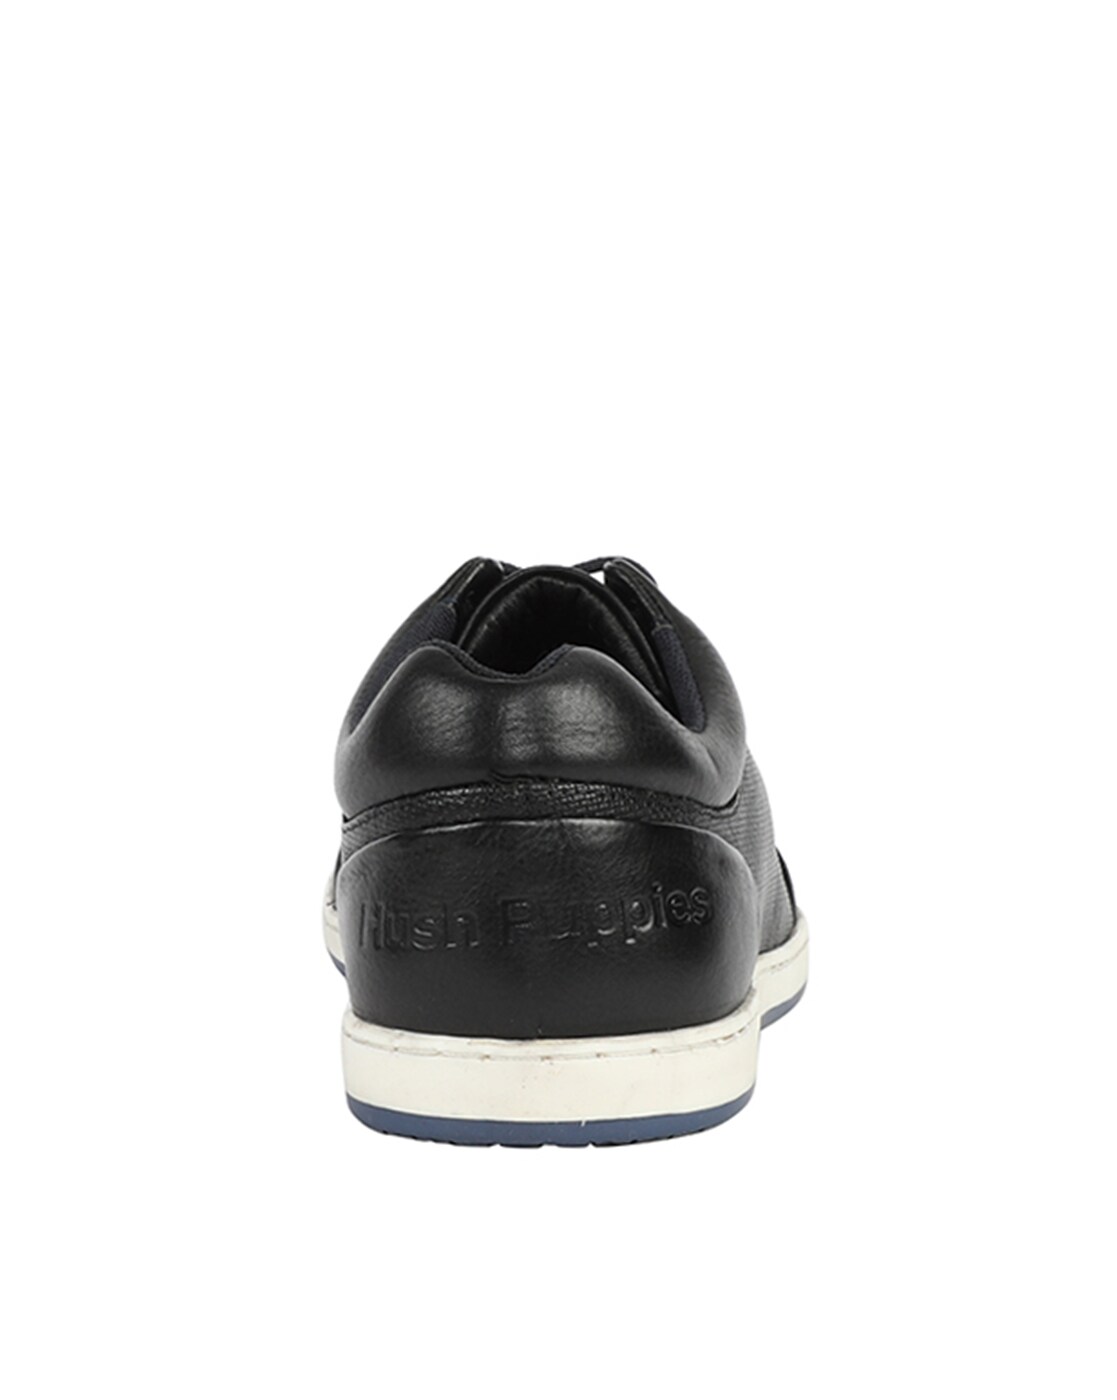 Buy Hush Puppies Mens Boston New Slip on Black Sneaker - 6 UK (0) at  Amazon.in